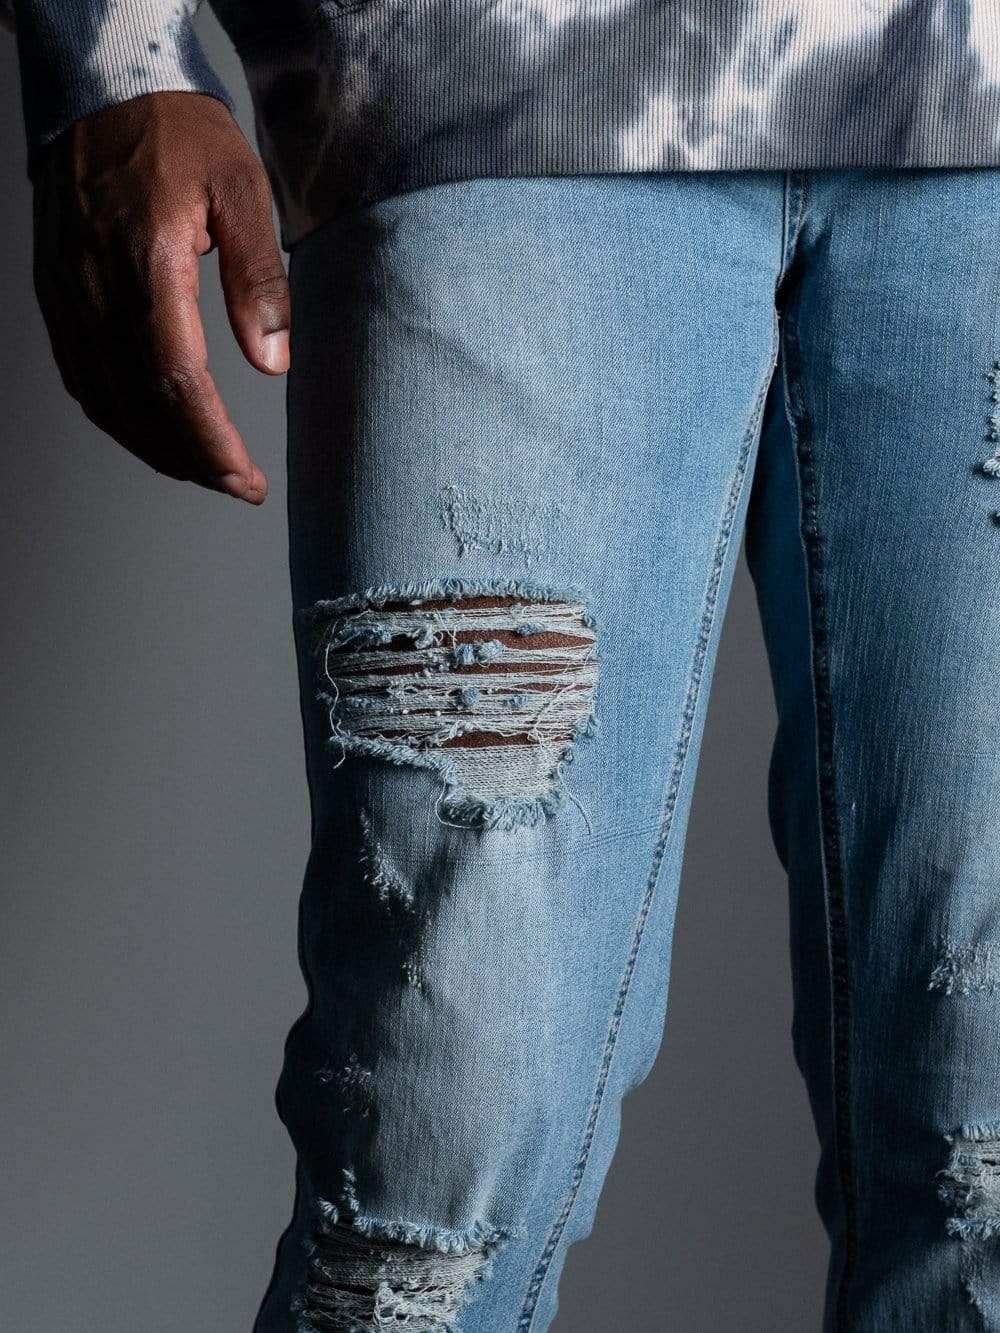 Wrangler® Men's Five Star Premium Regular Flex Fit Jean